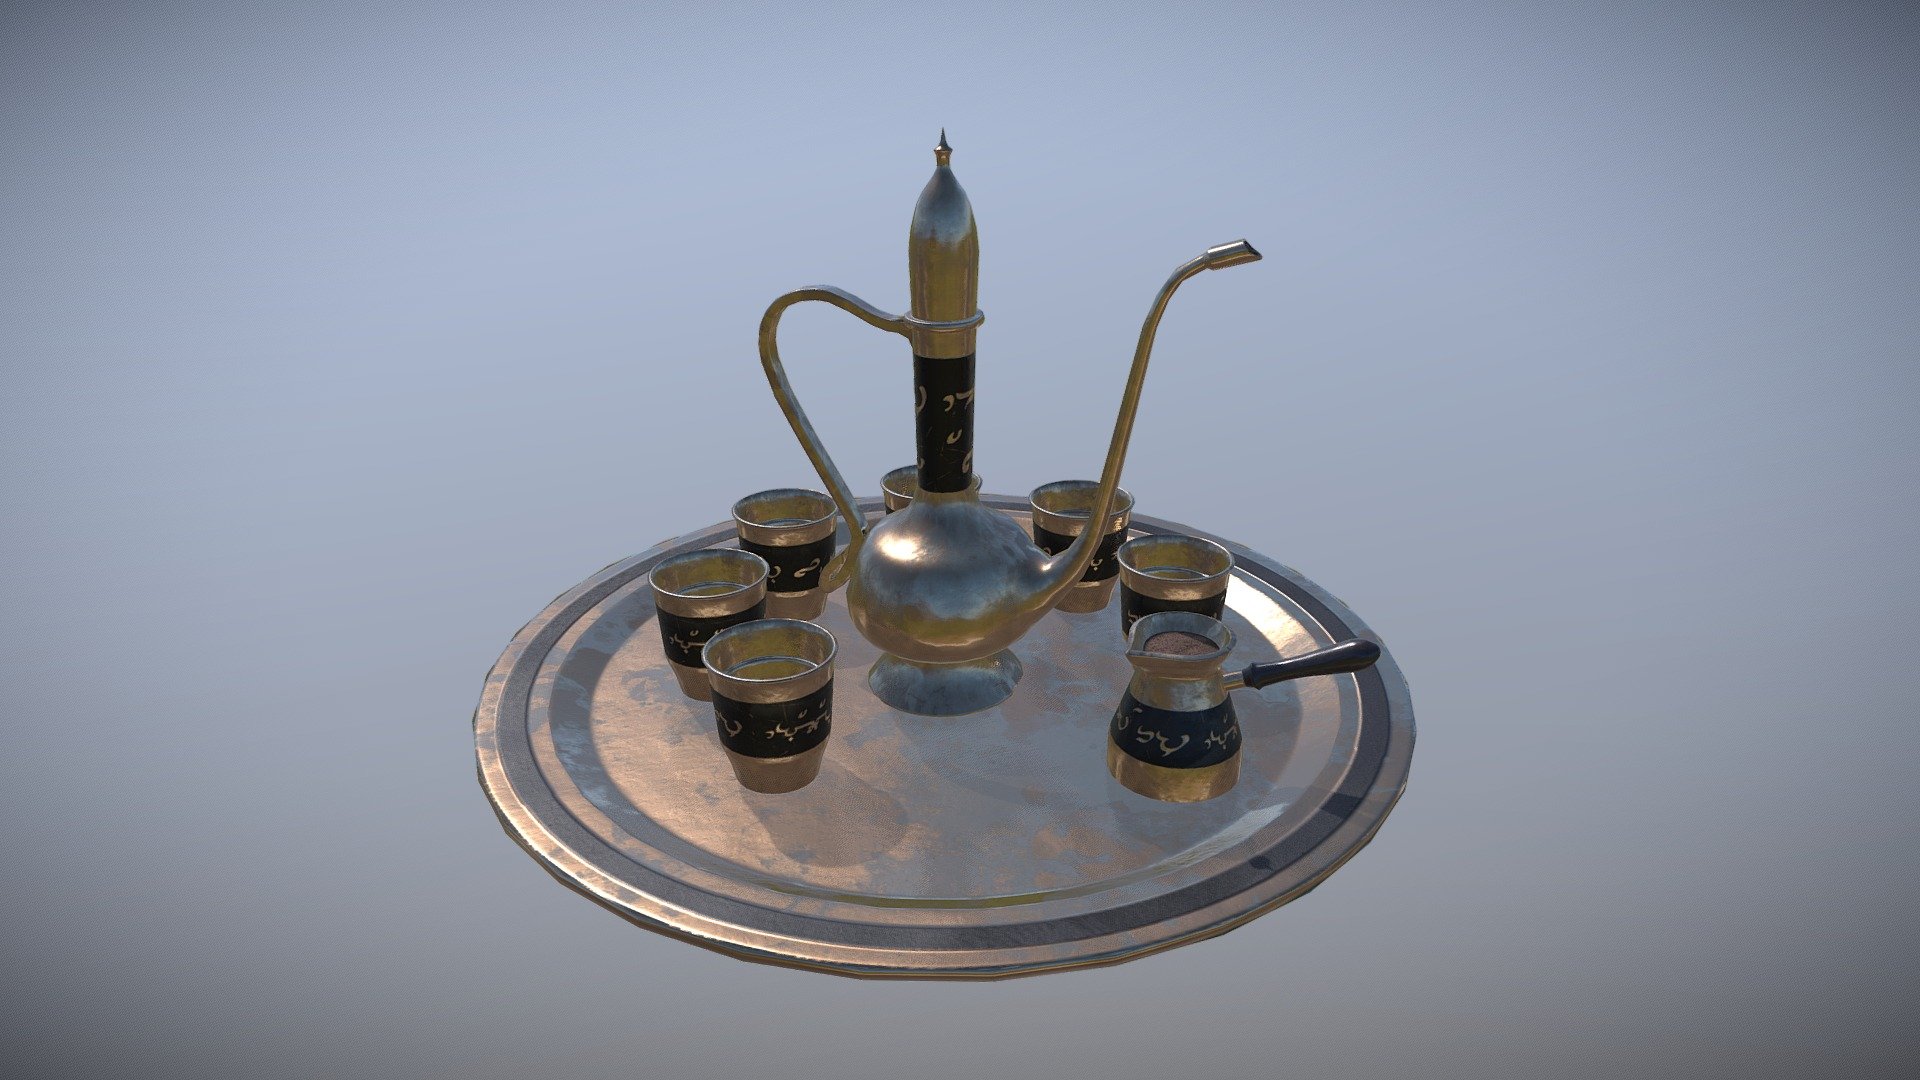 A tea set i made for Beyond Skyrim Elsweyr - Arabic Tea/Coffee Set - 3D model by fritiof 3d model